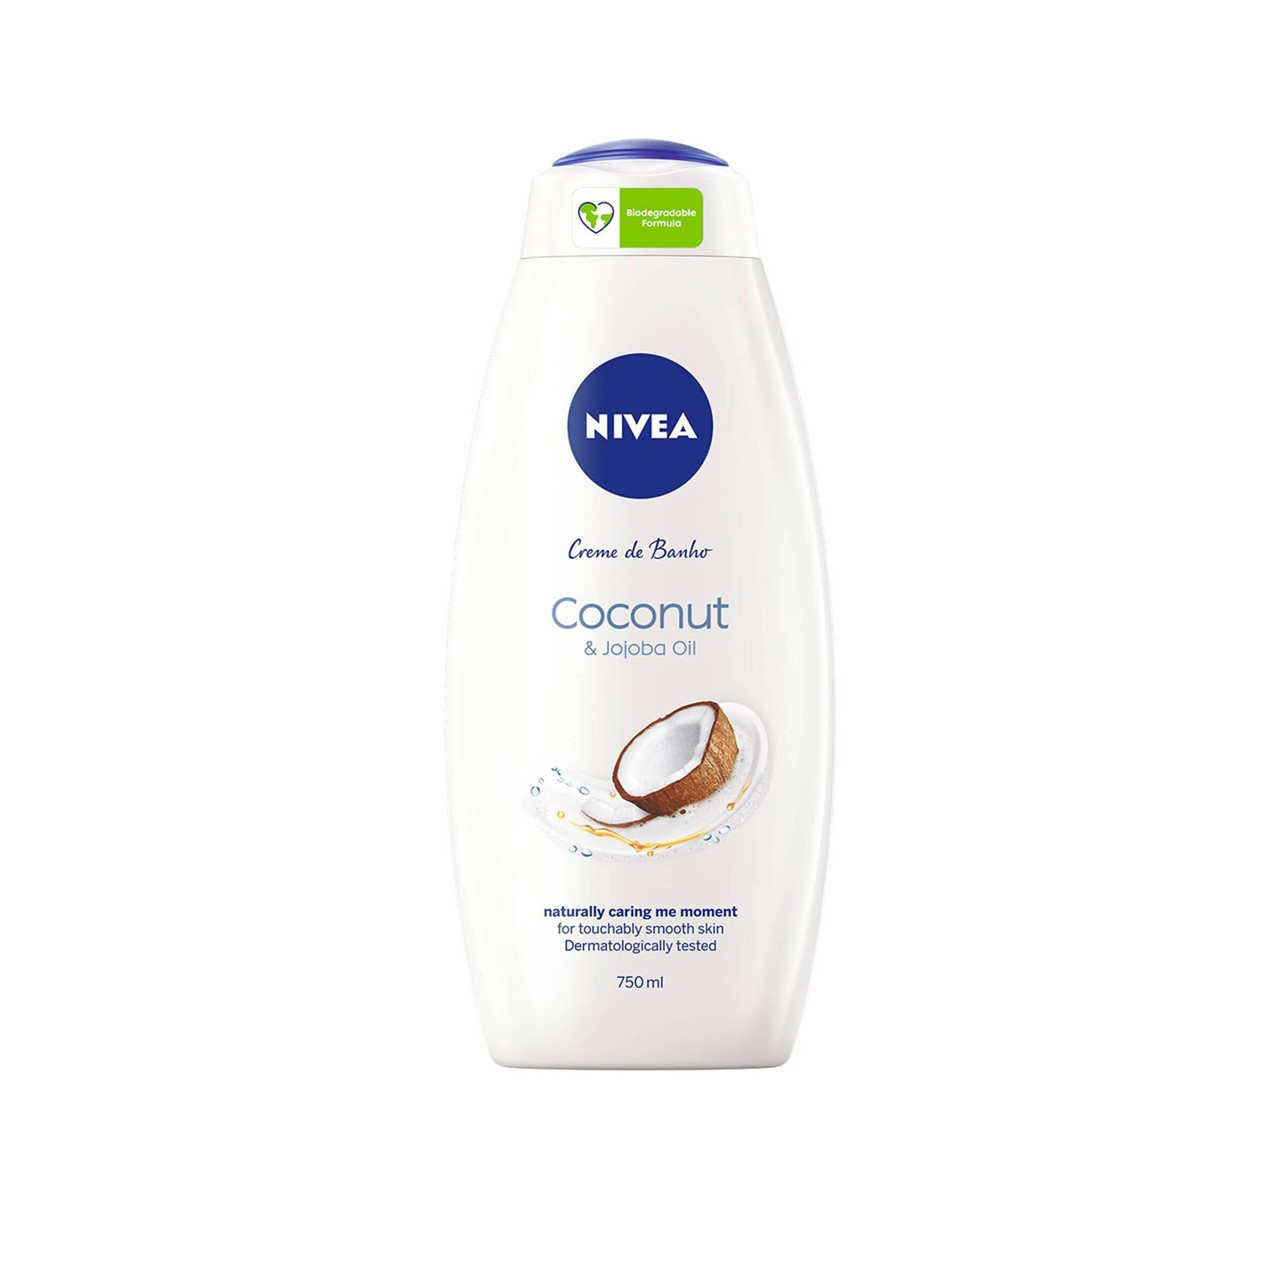 Nivea Coconut & Jojoba Oil Shower Cream 750ml (25.36fl oz)